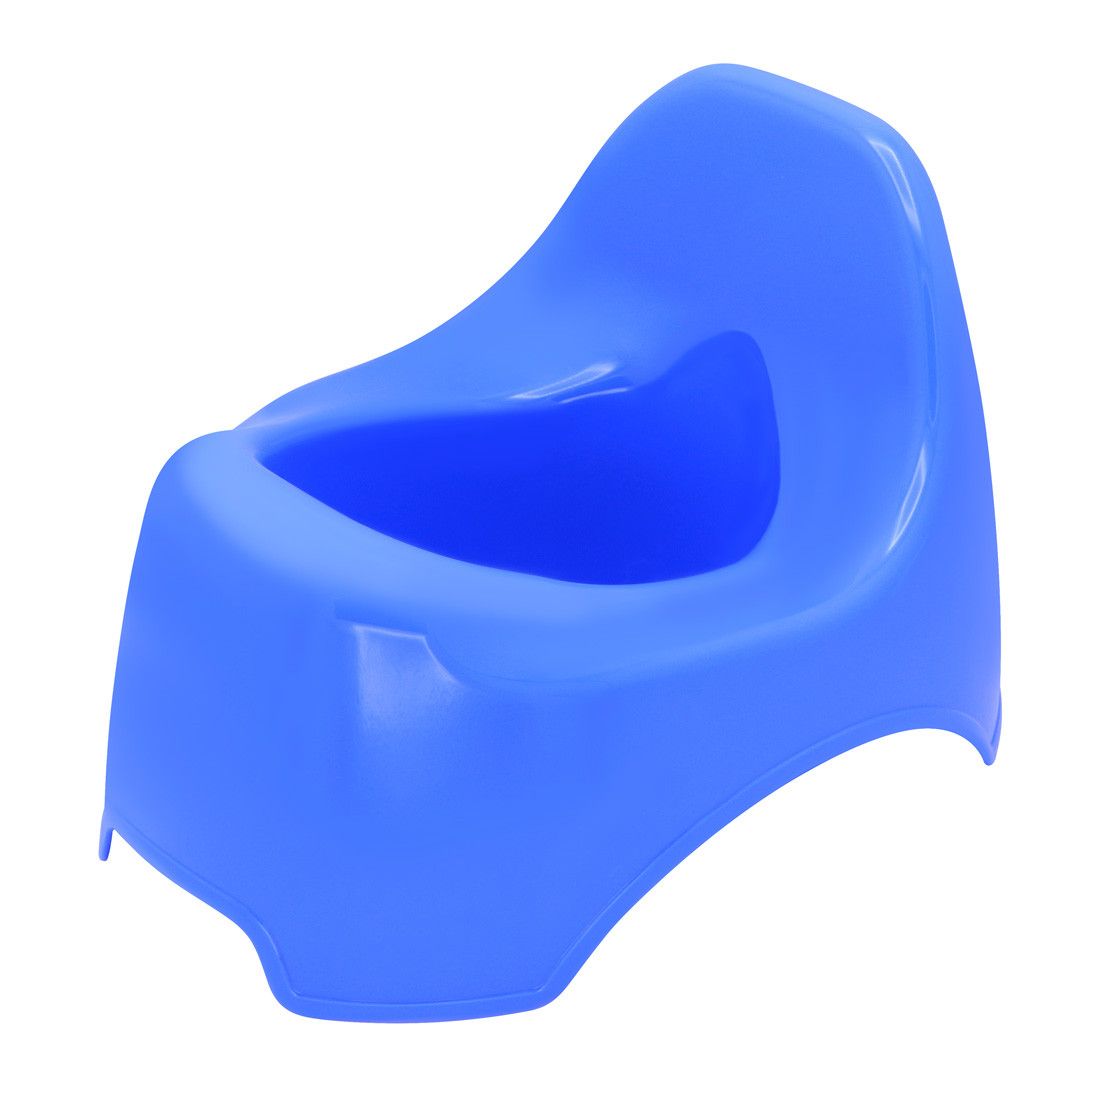 Горщик дитячий пластиковий Горизонт блакитний - купить в магазине Plus-Plus по цене 137 грн.